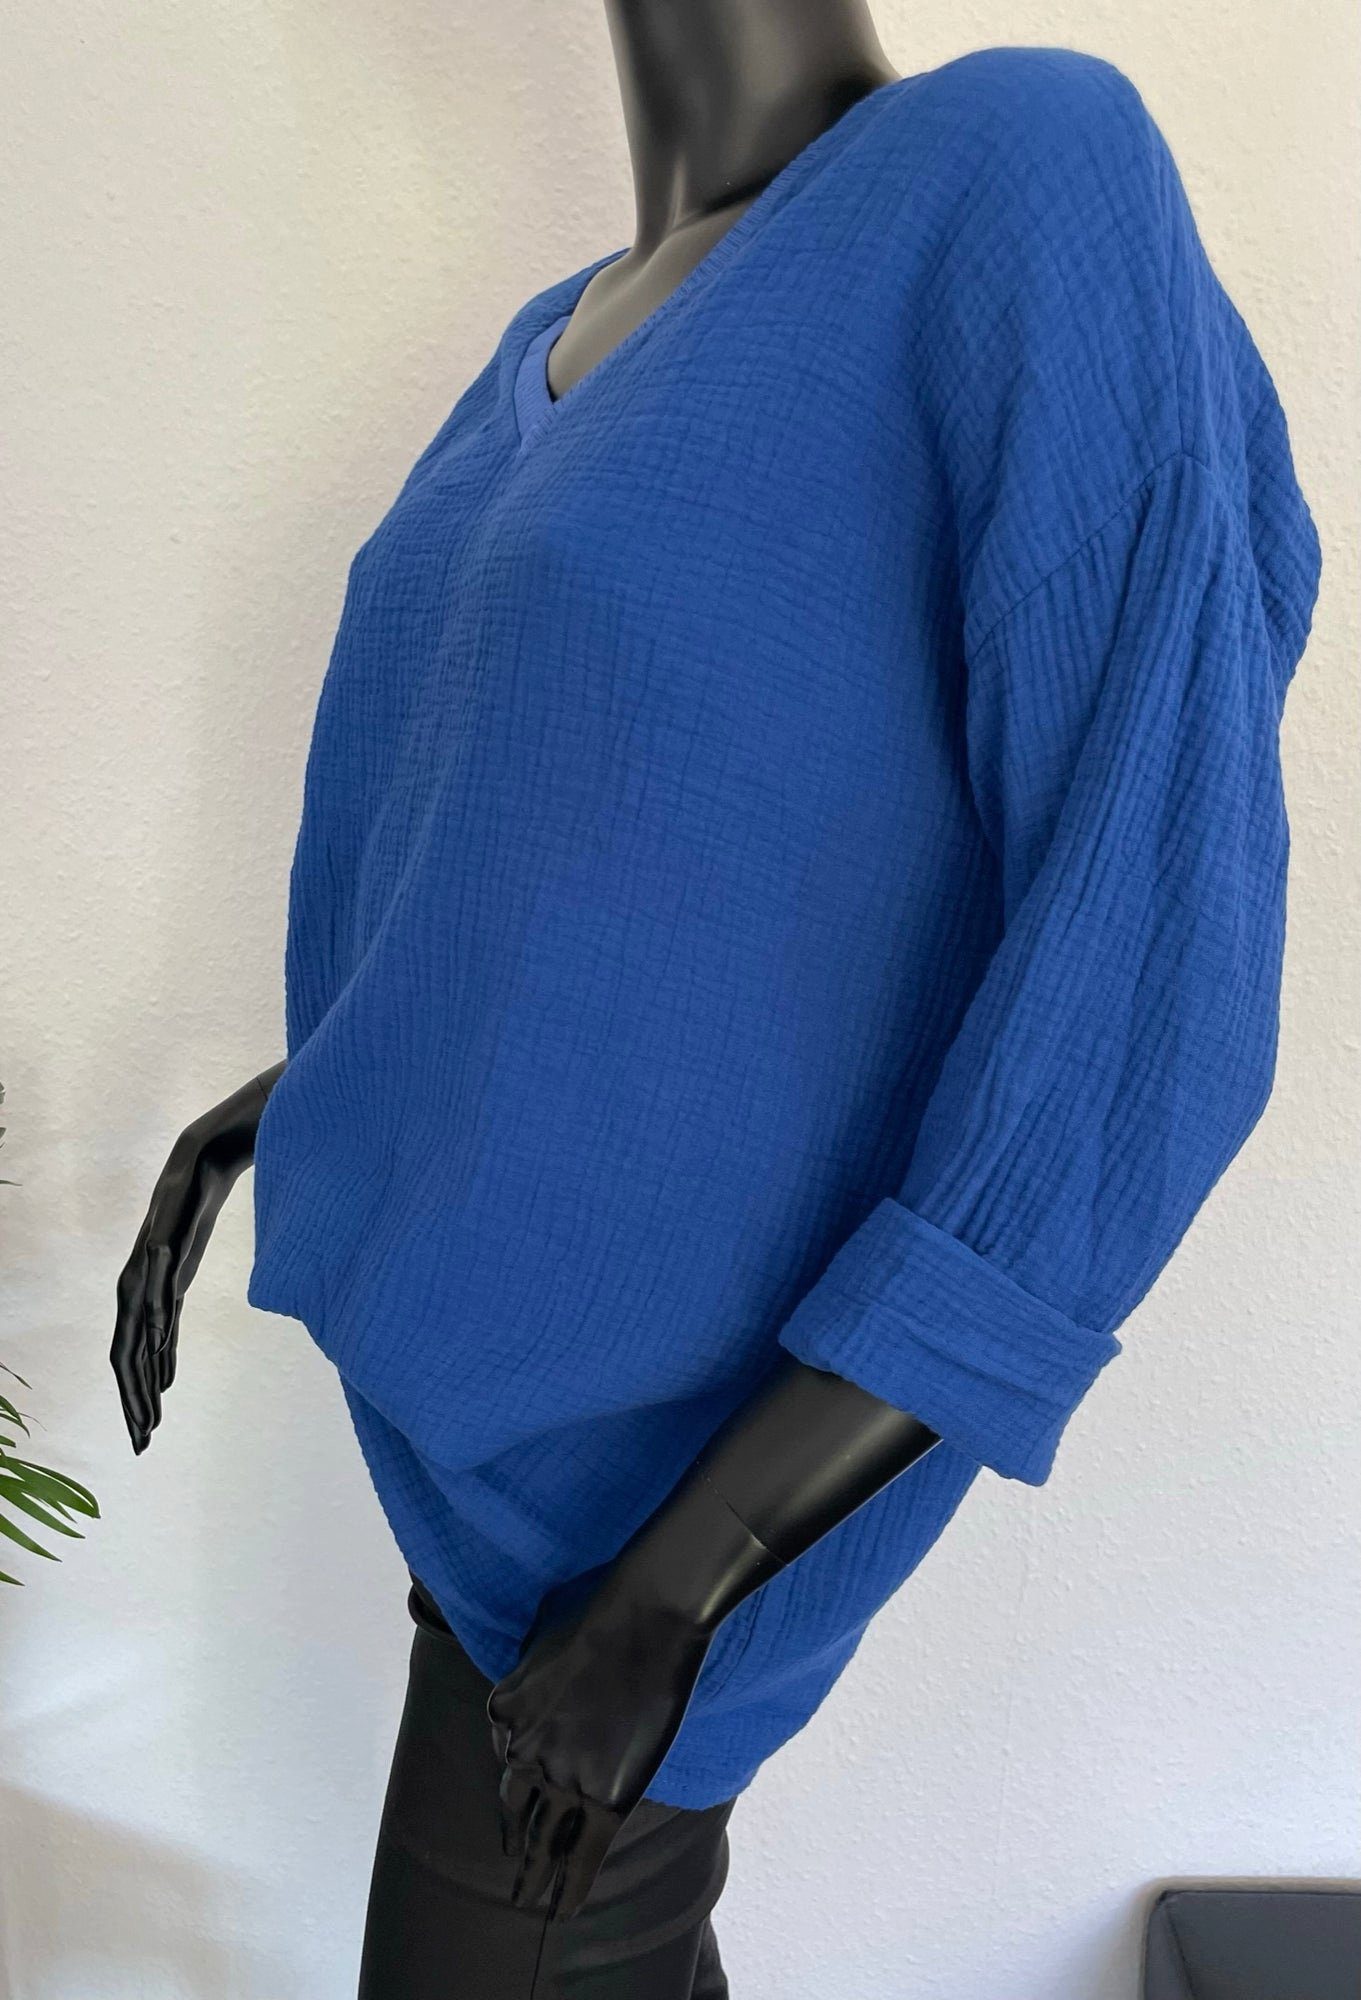 Blusenshirt royalblau Musselin Shirt TrendFashion Blusen online